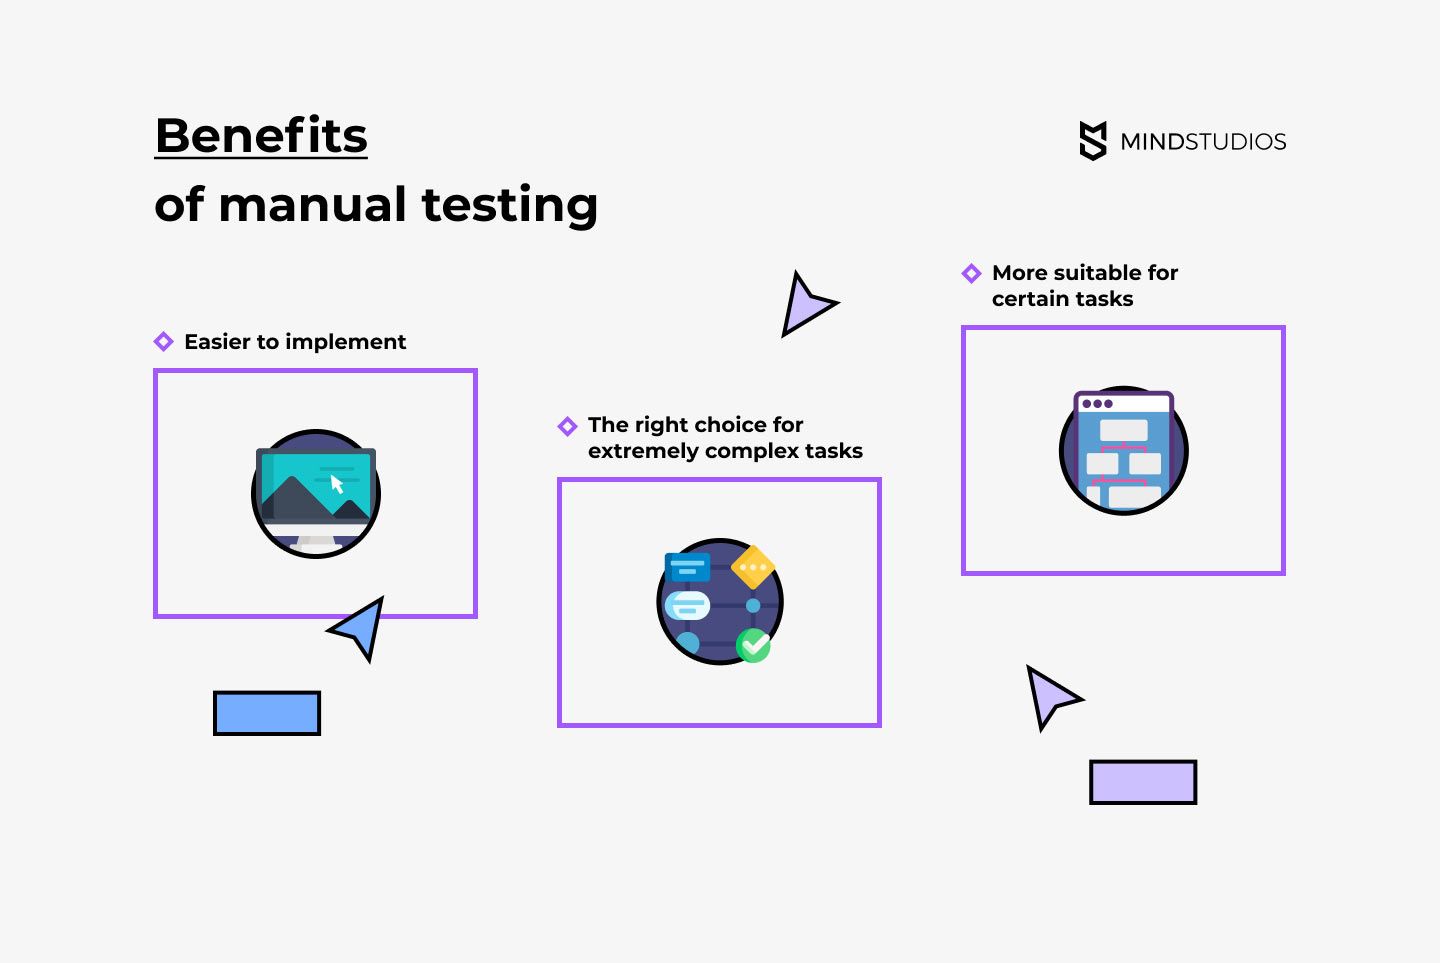 Benefits of manual testing